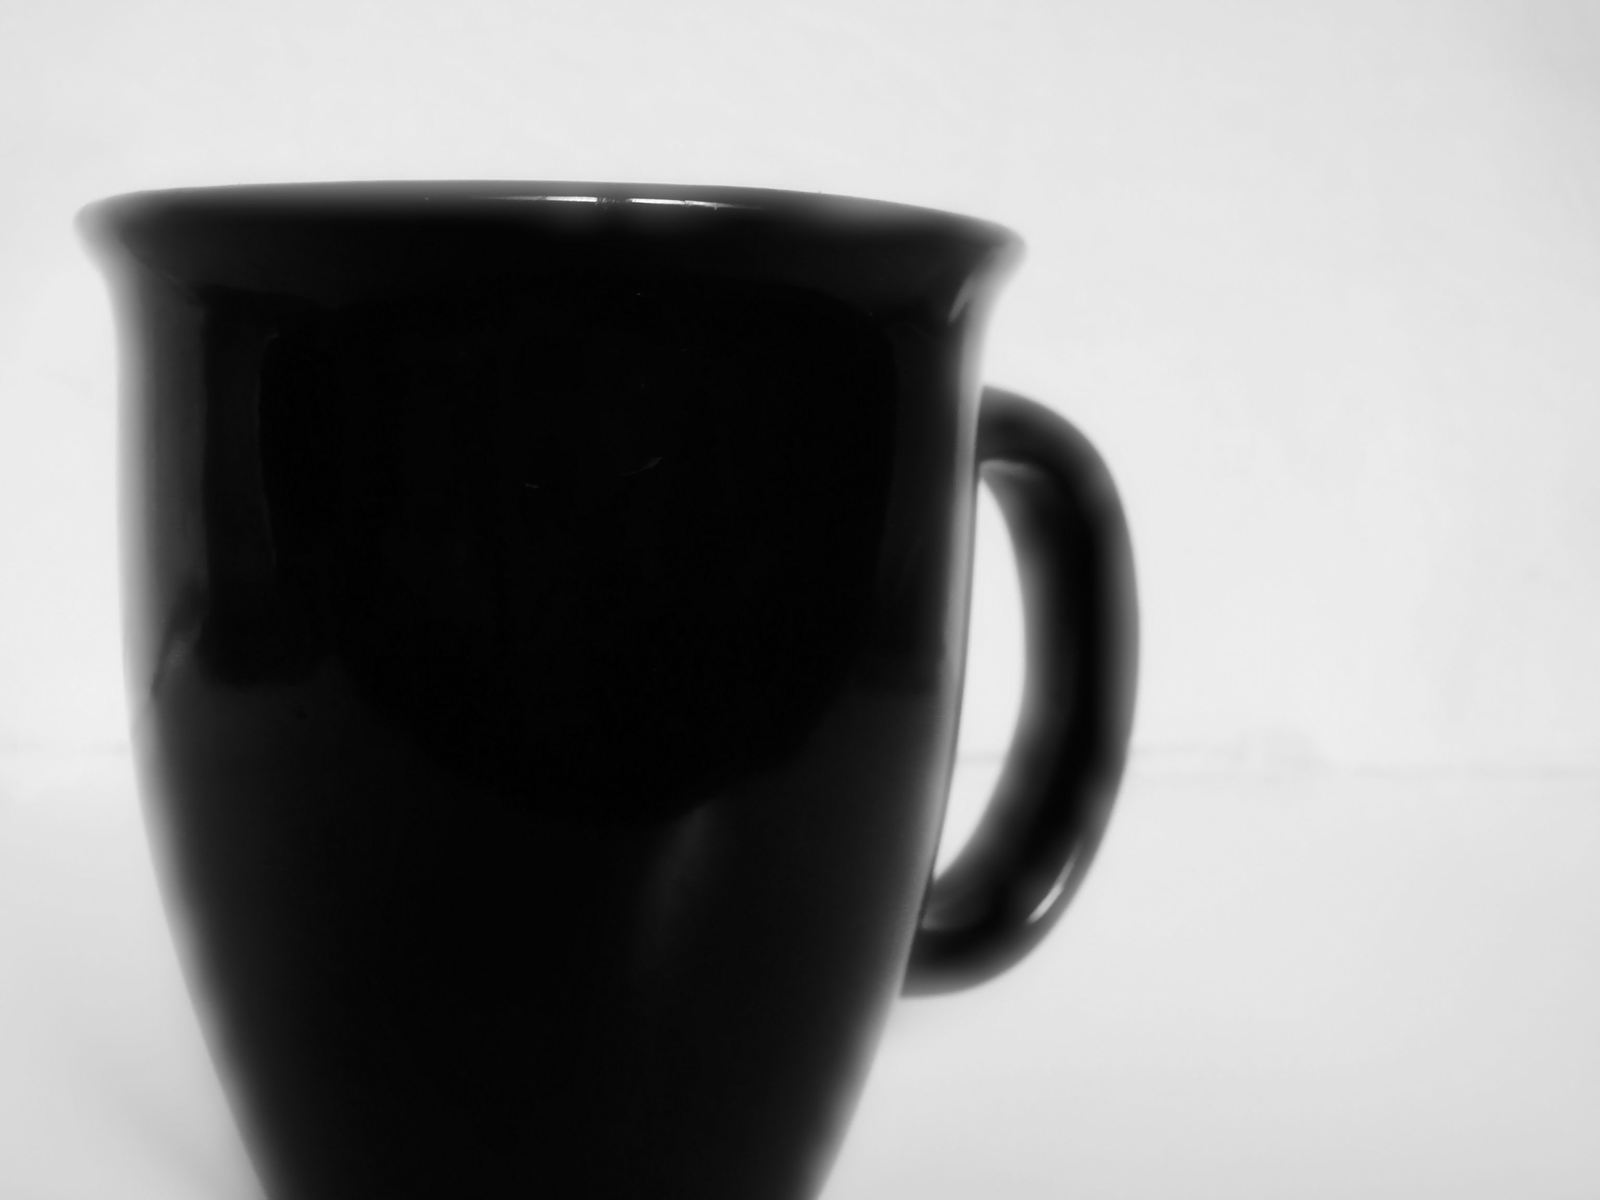 a black coffee mug is sitting on a white table